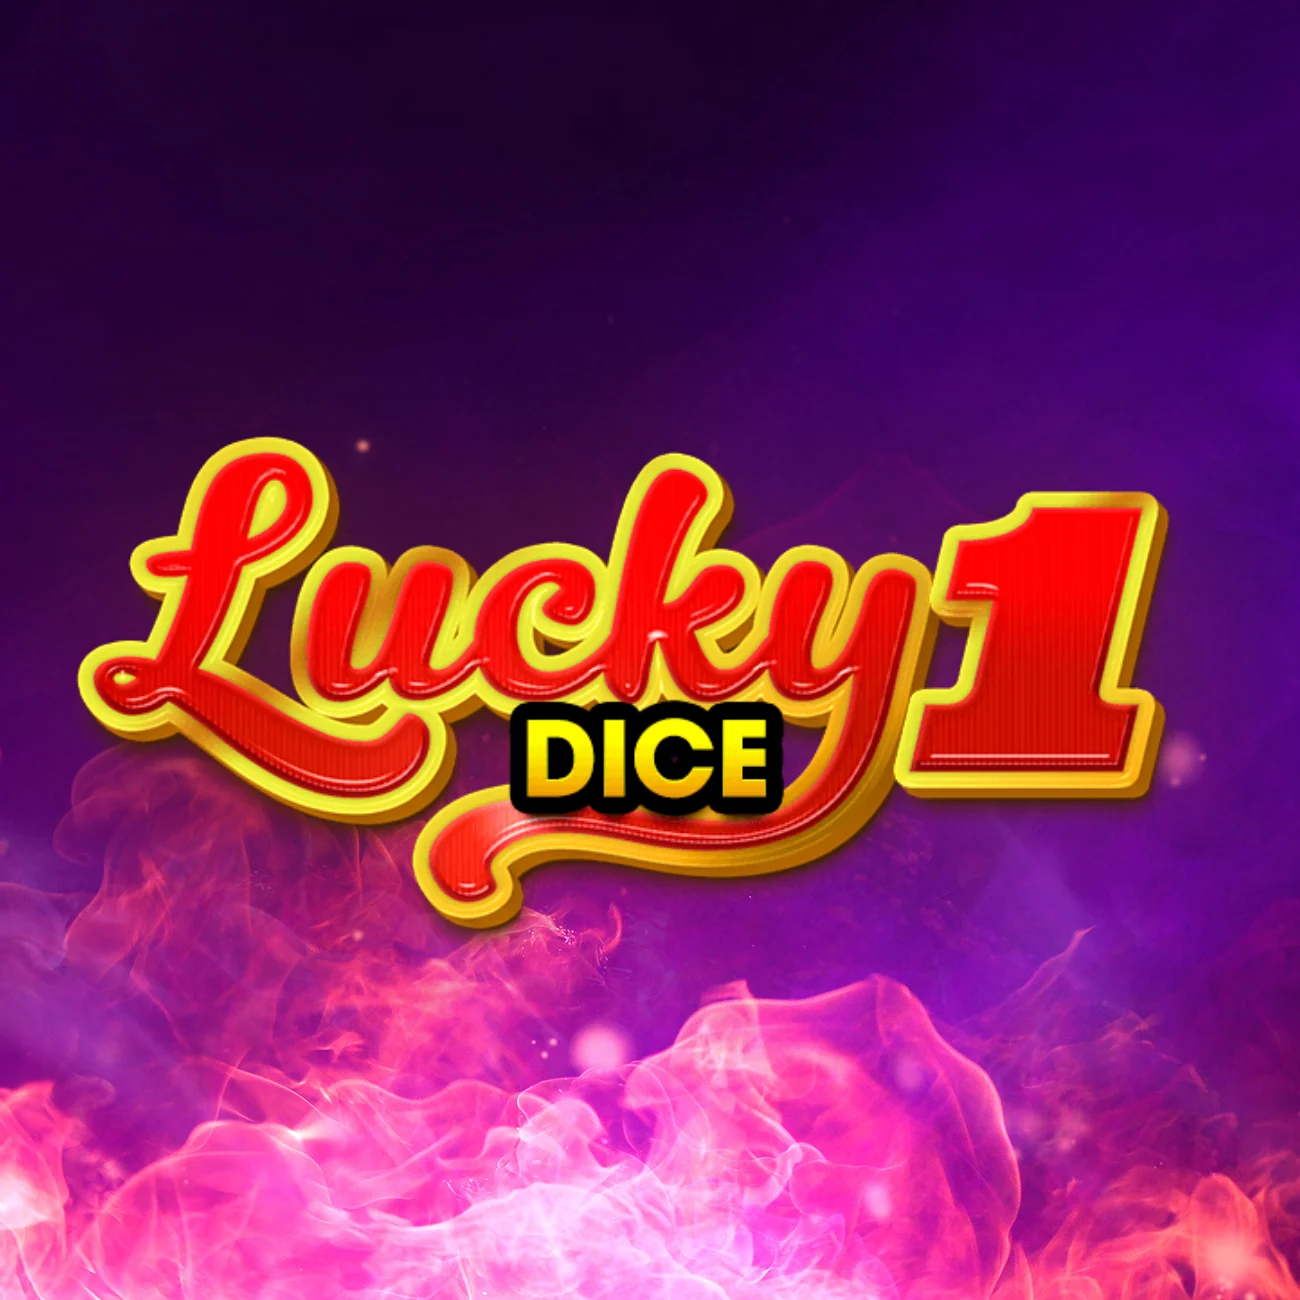 Play Lucky Dice 1 on Starcasinodice online casino